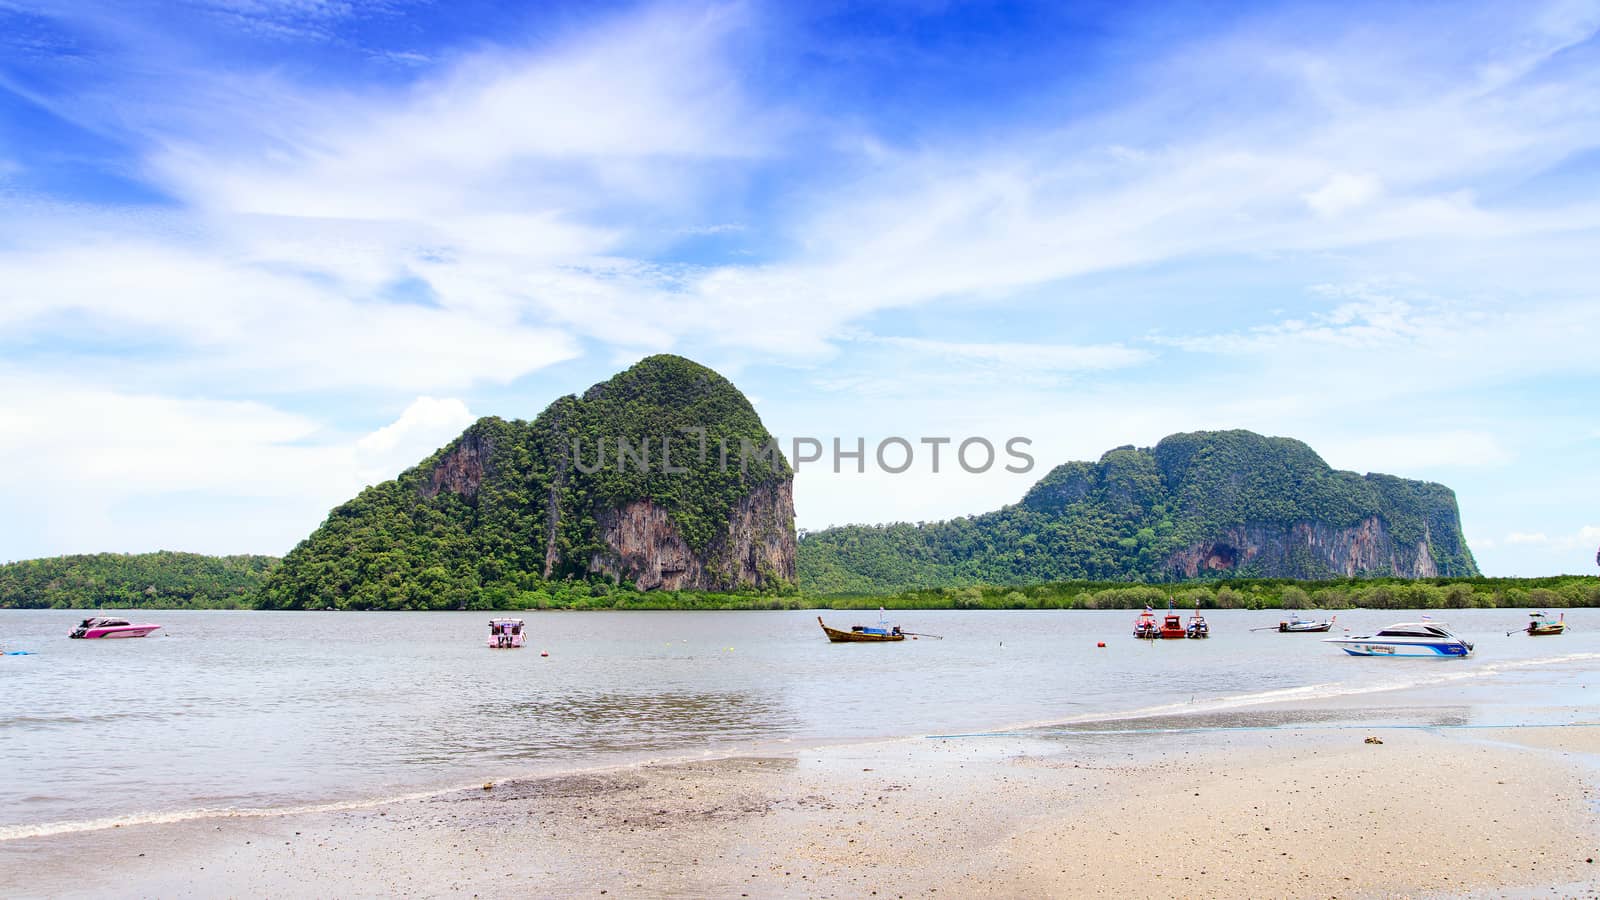 Beach at Trang in the Andaman Sea, Thailand  by jakgree